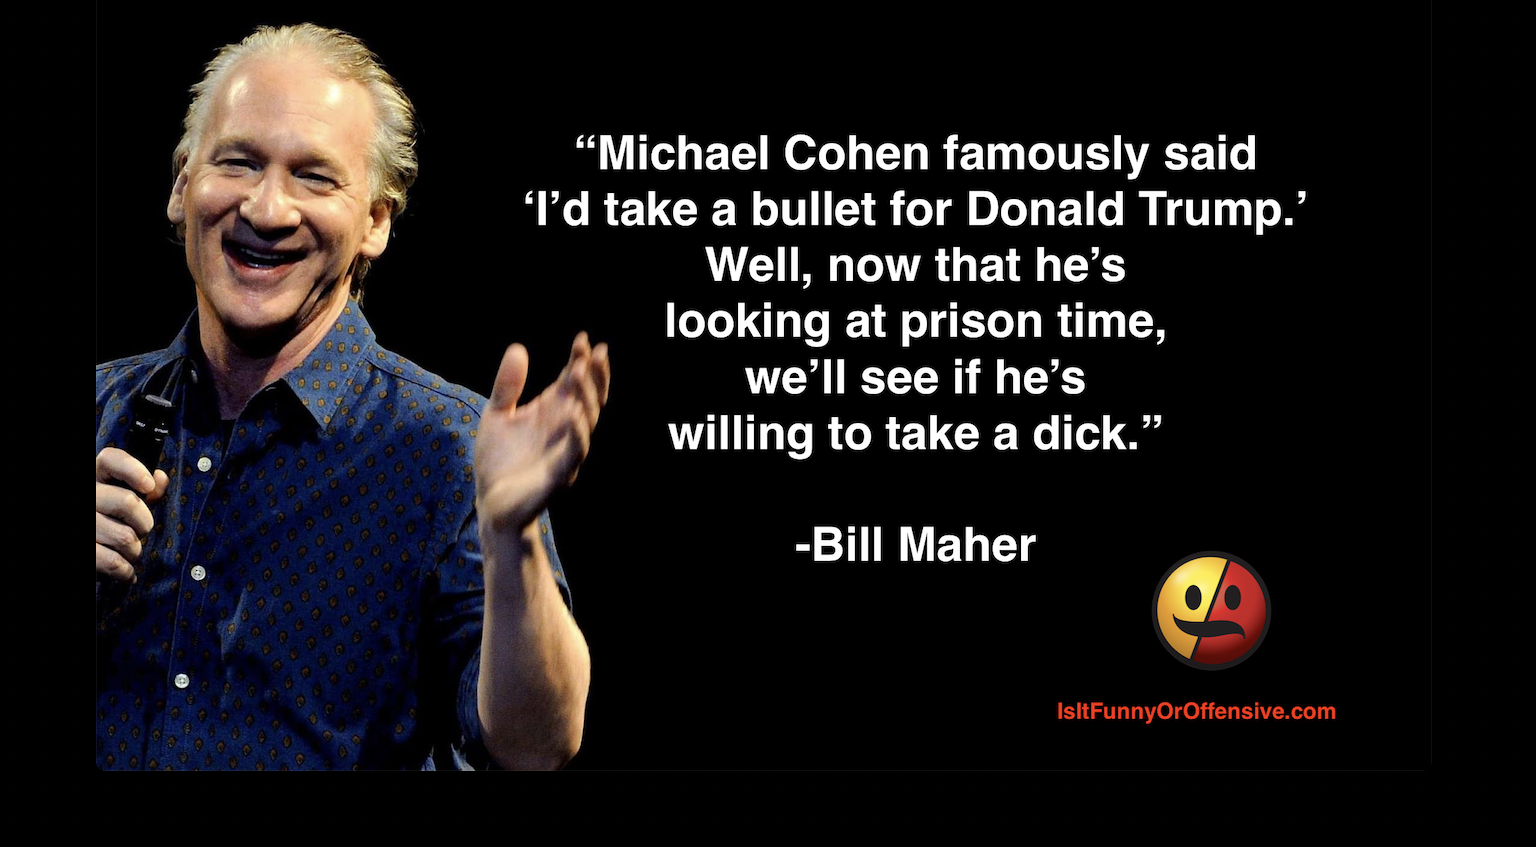 Bill Maher on Michael Cohen